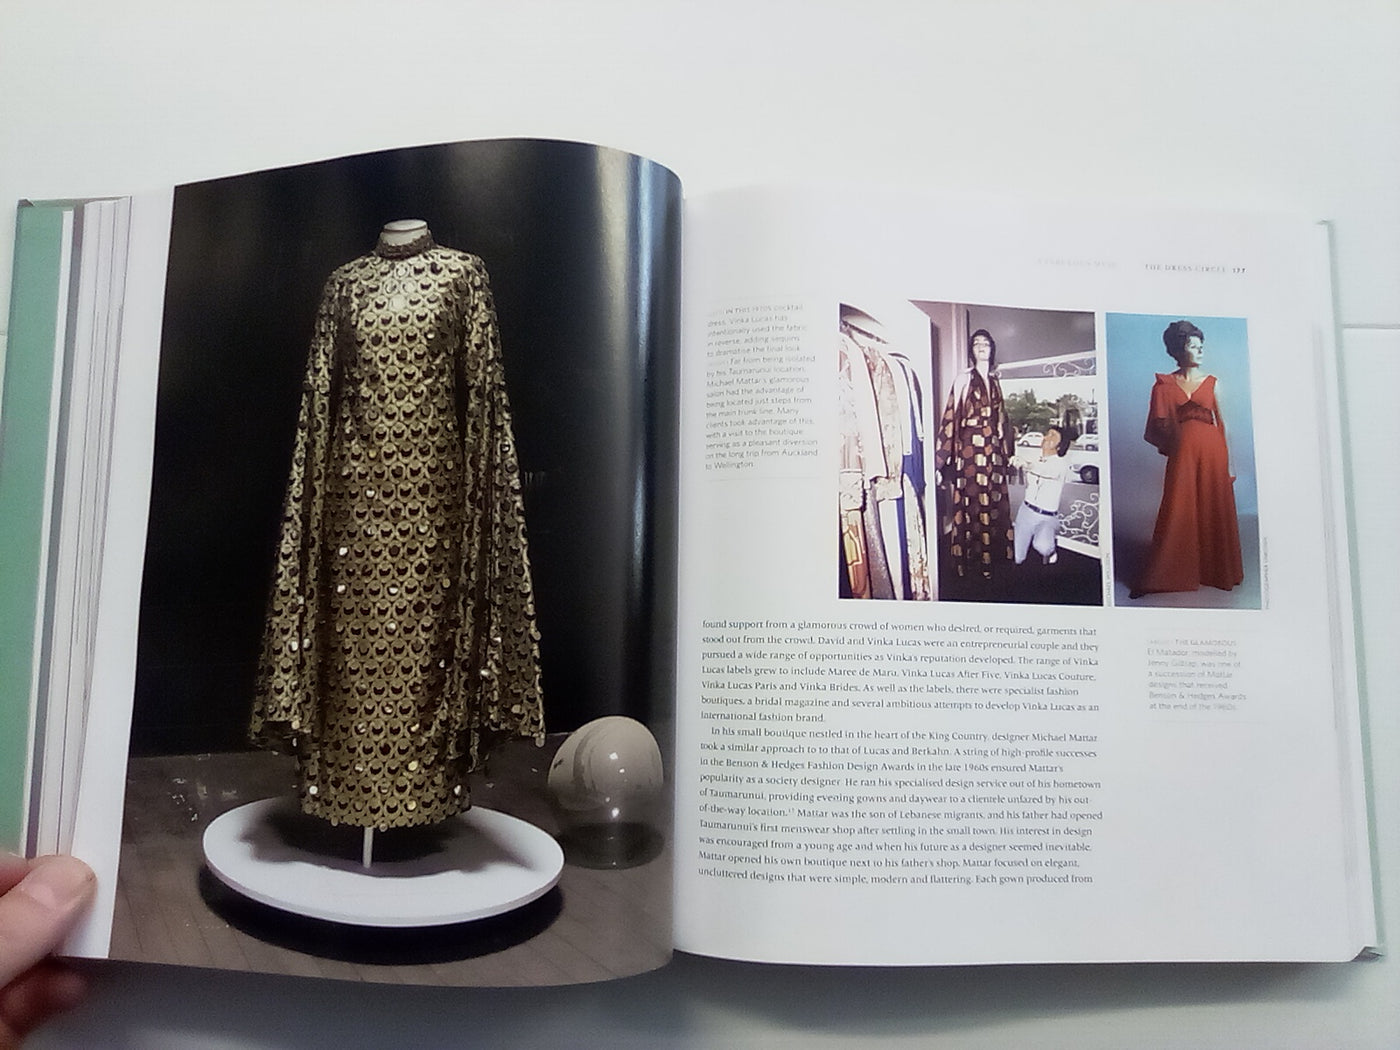 The Dress Circle - New Zealand Fashion Design Since 1940